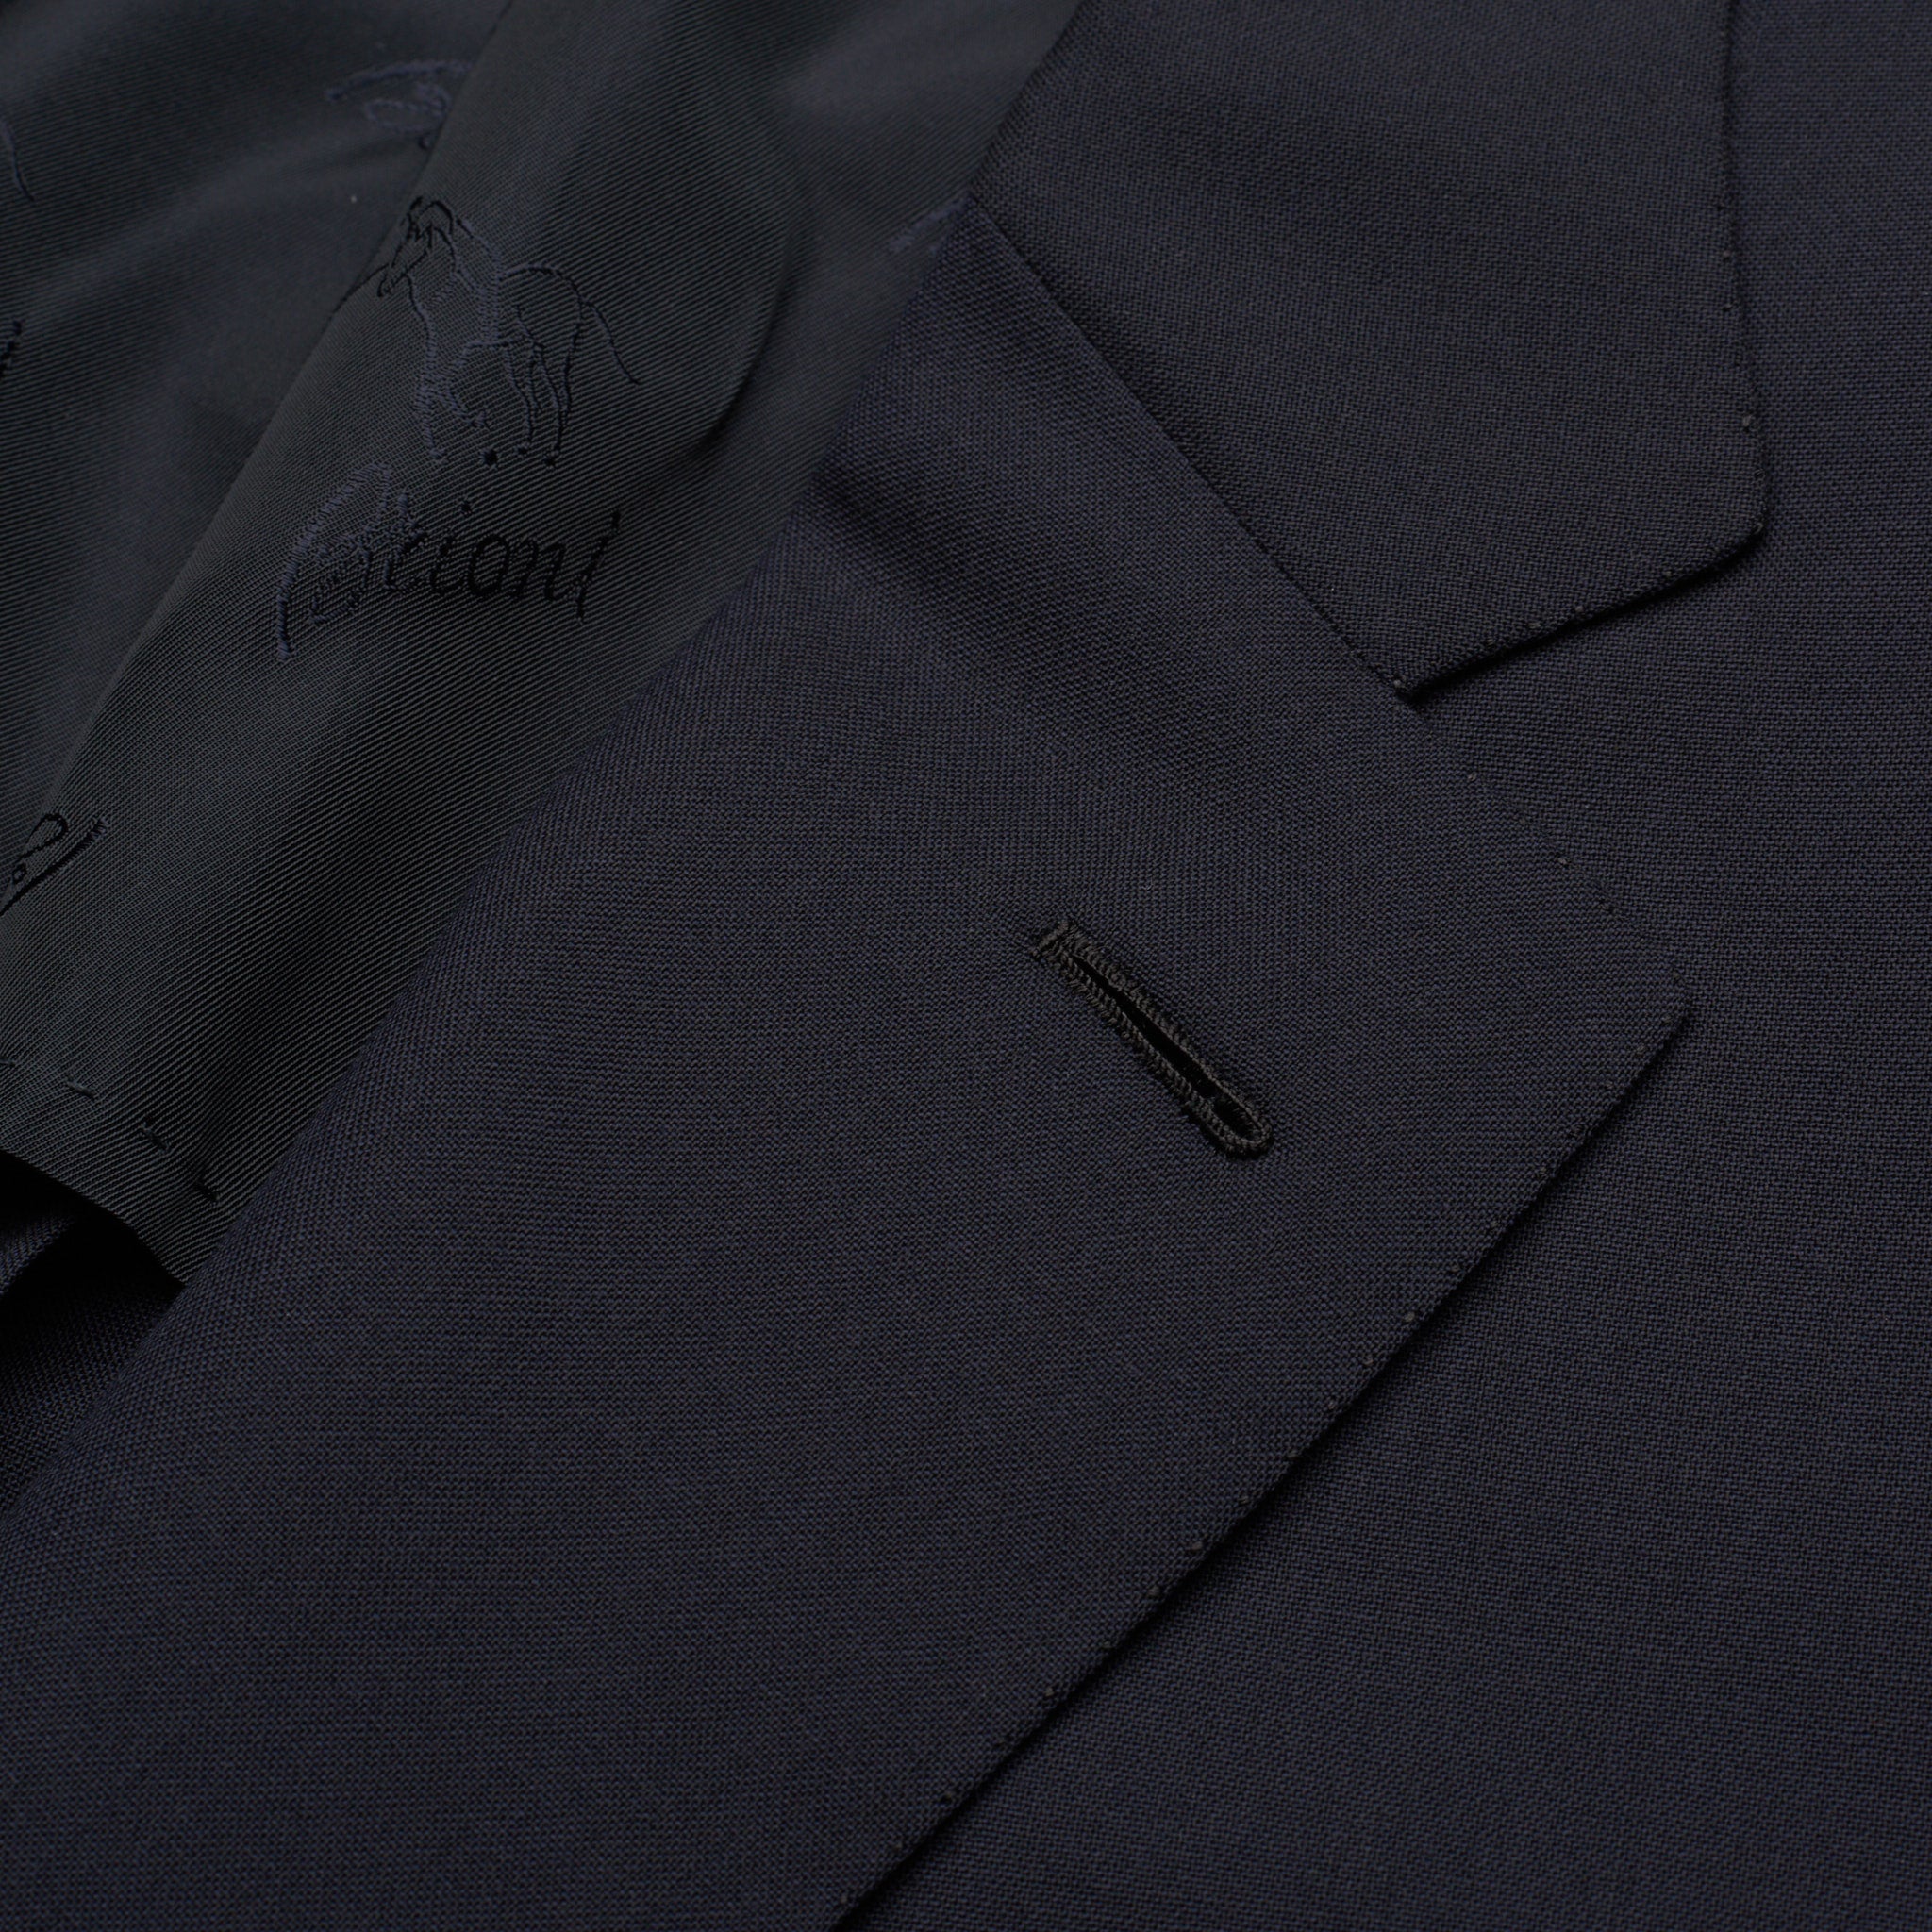 BRIONI "BRUNICO" Handmade Midnight Blue Wool Jacket NEW BRIONI